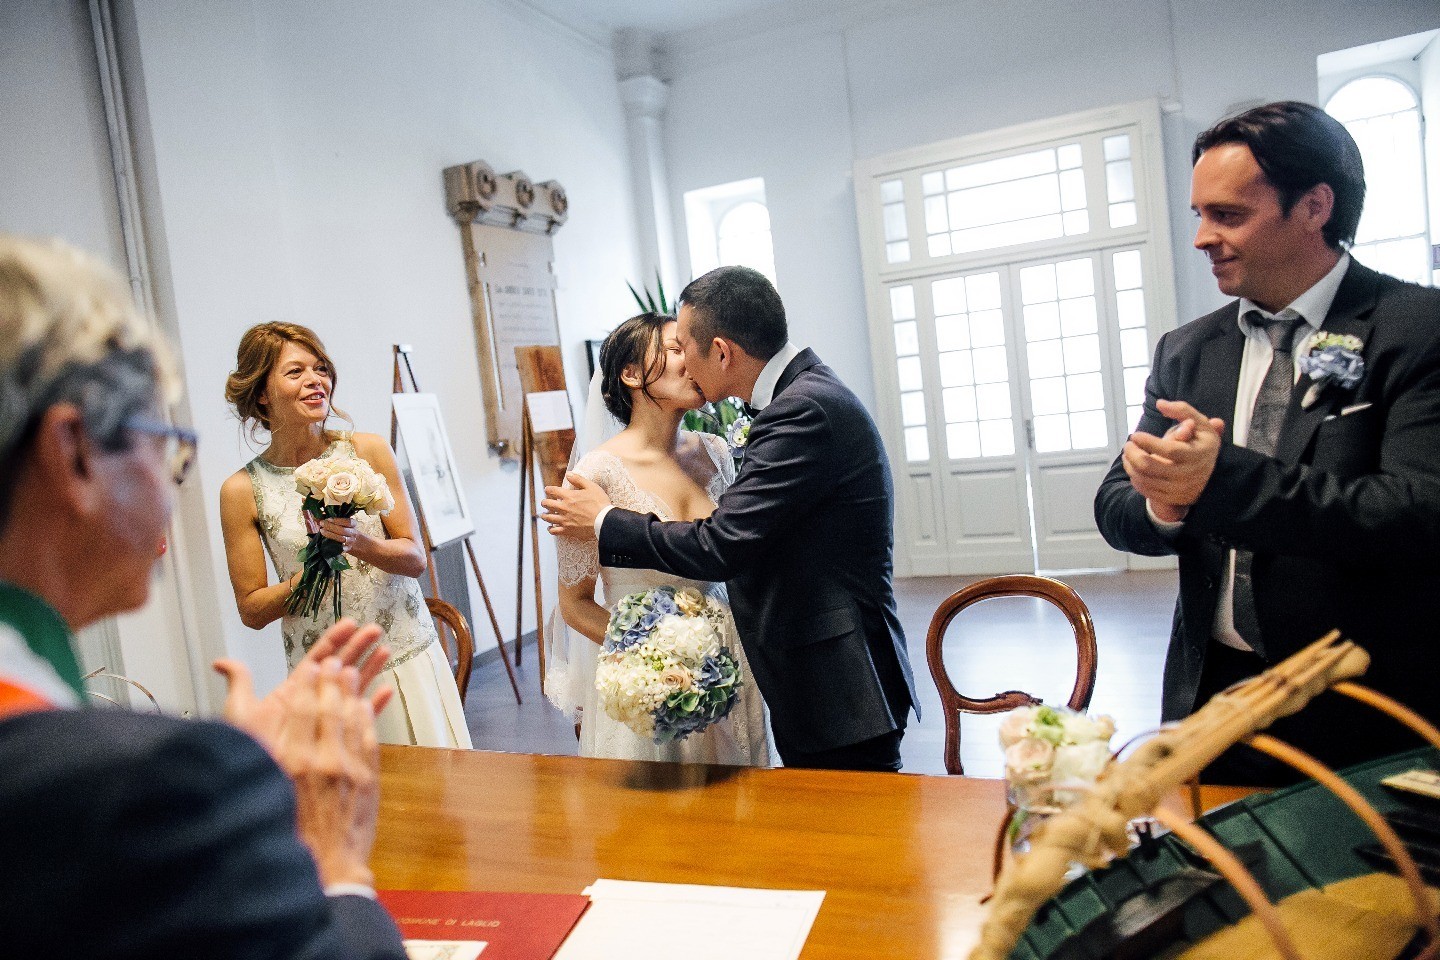 Комо на двоих: романтичная свадьба в Италии